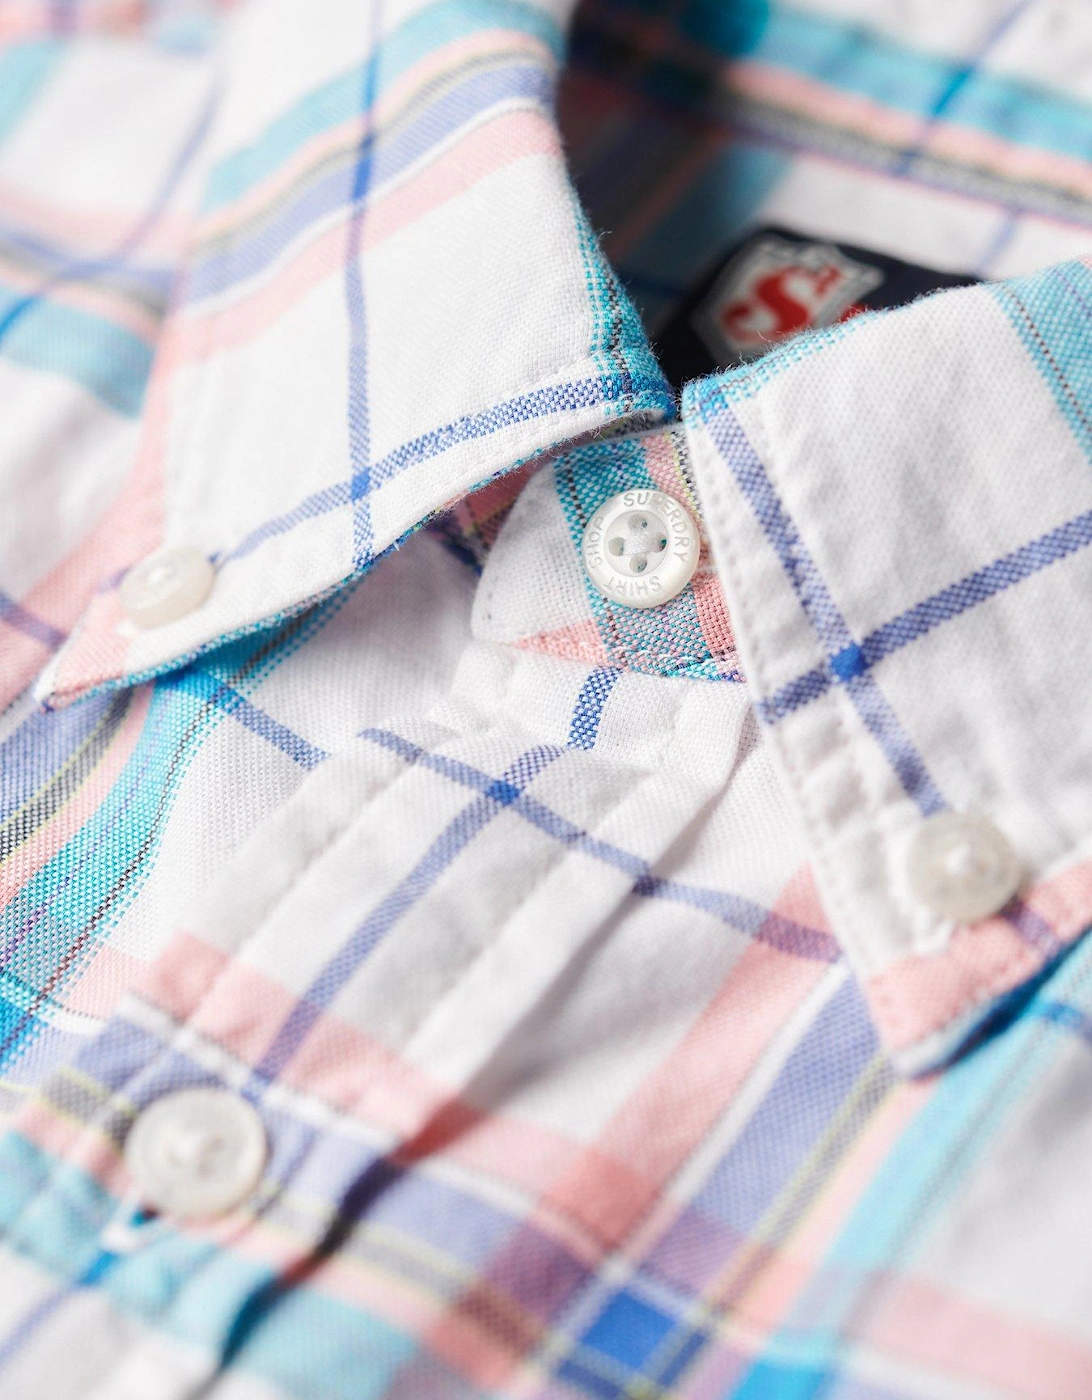 Lightweight Short Sleeve Check Shirt - Multi